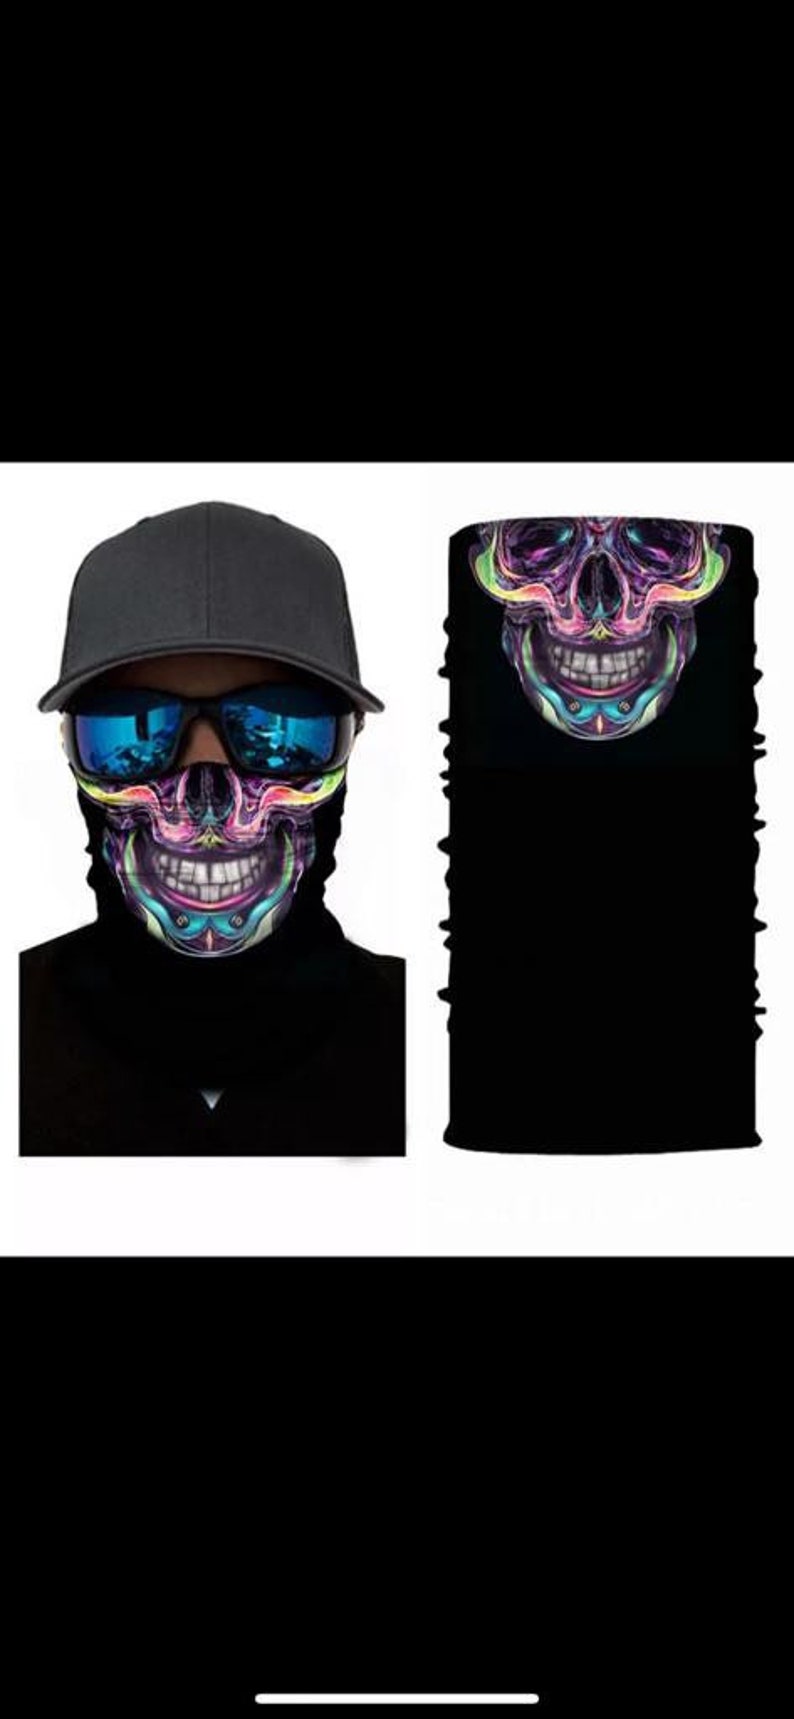 Bandana de cyclisme, tour de cou de randonnée, tour de cou chaud, masque facial en forme de crâne image 1